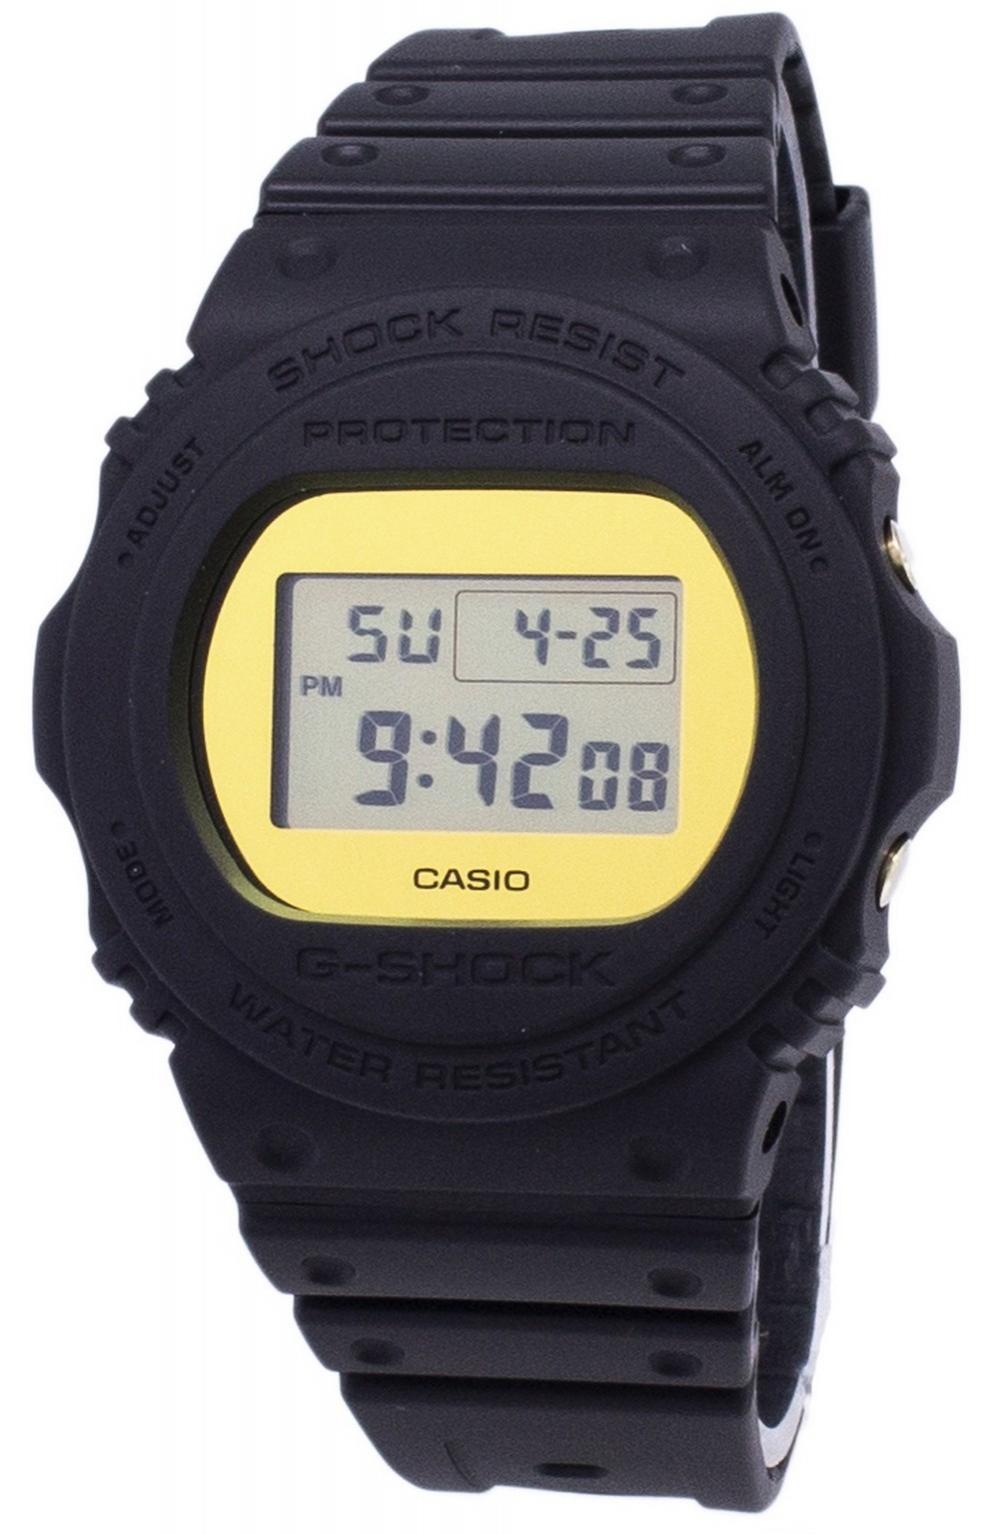 Casio G-Shock Special Color Models 200M DW-5700BBMB-1 DW5700BBMB-1 Men's Watch